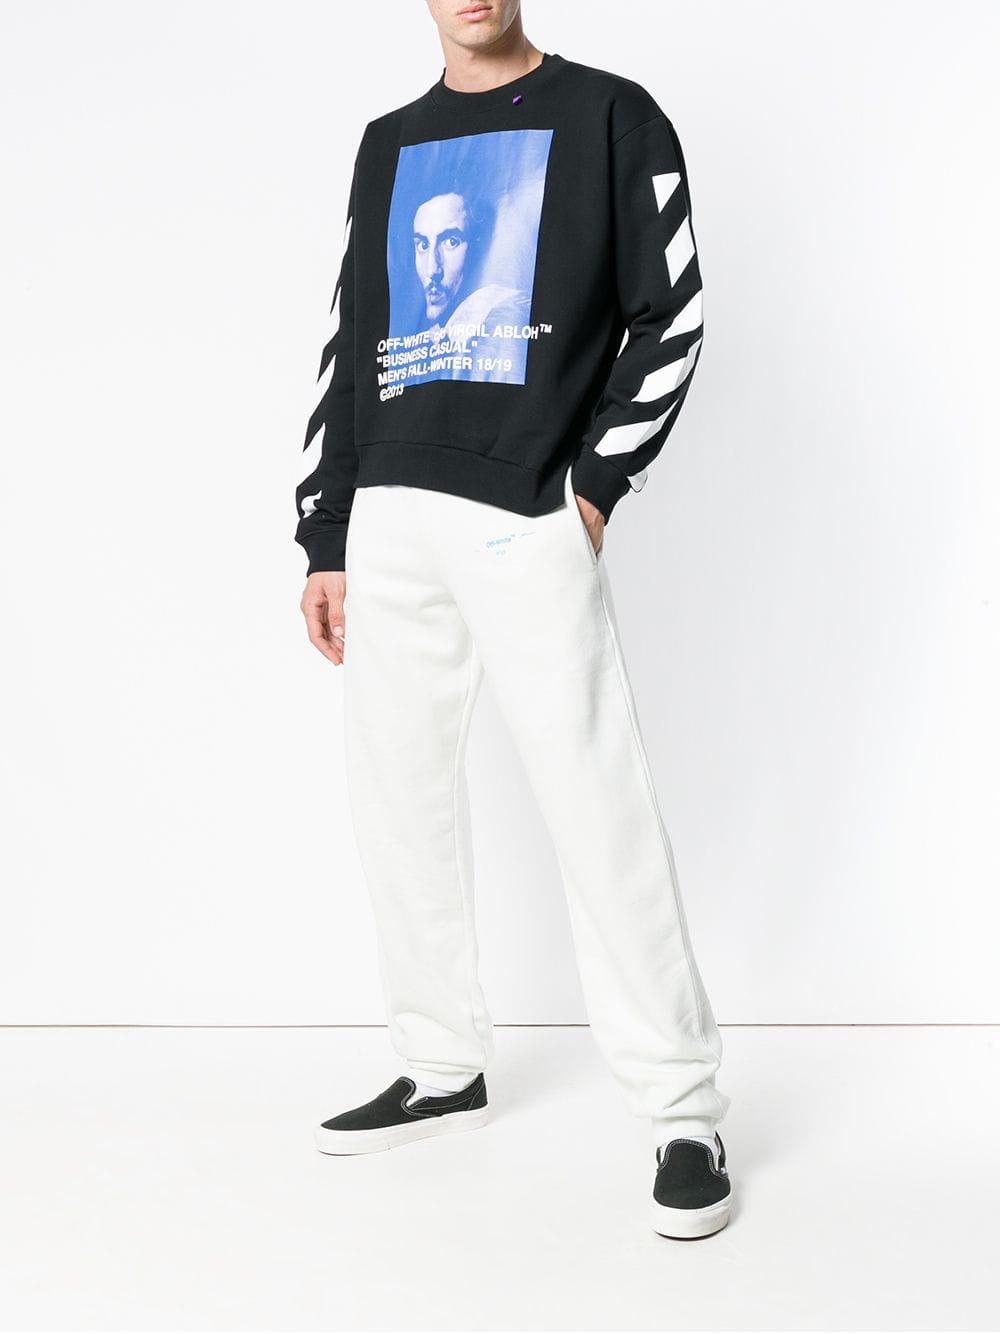 Bedrift malt Paranafloden Off-White c/o Virgil Abloh Business Casual Sweatshirt for Men - Lyst